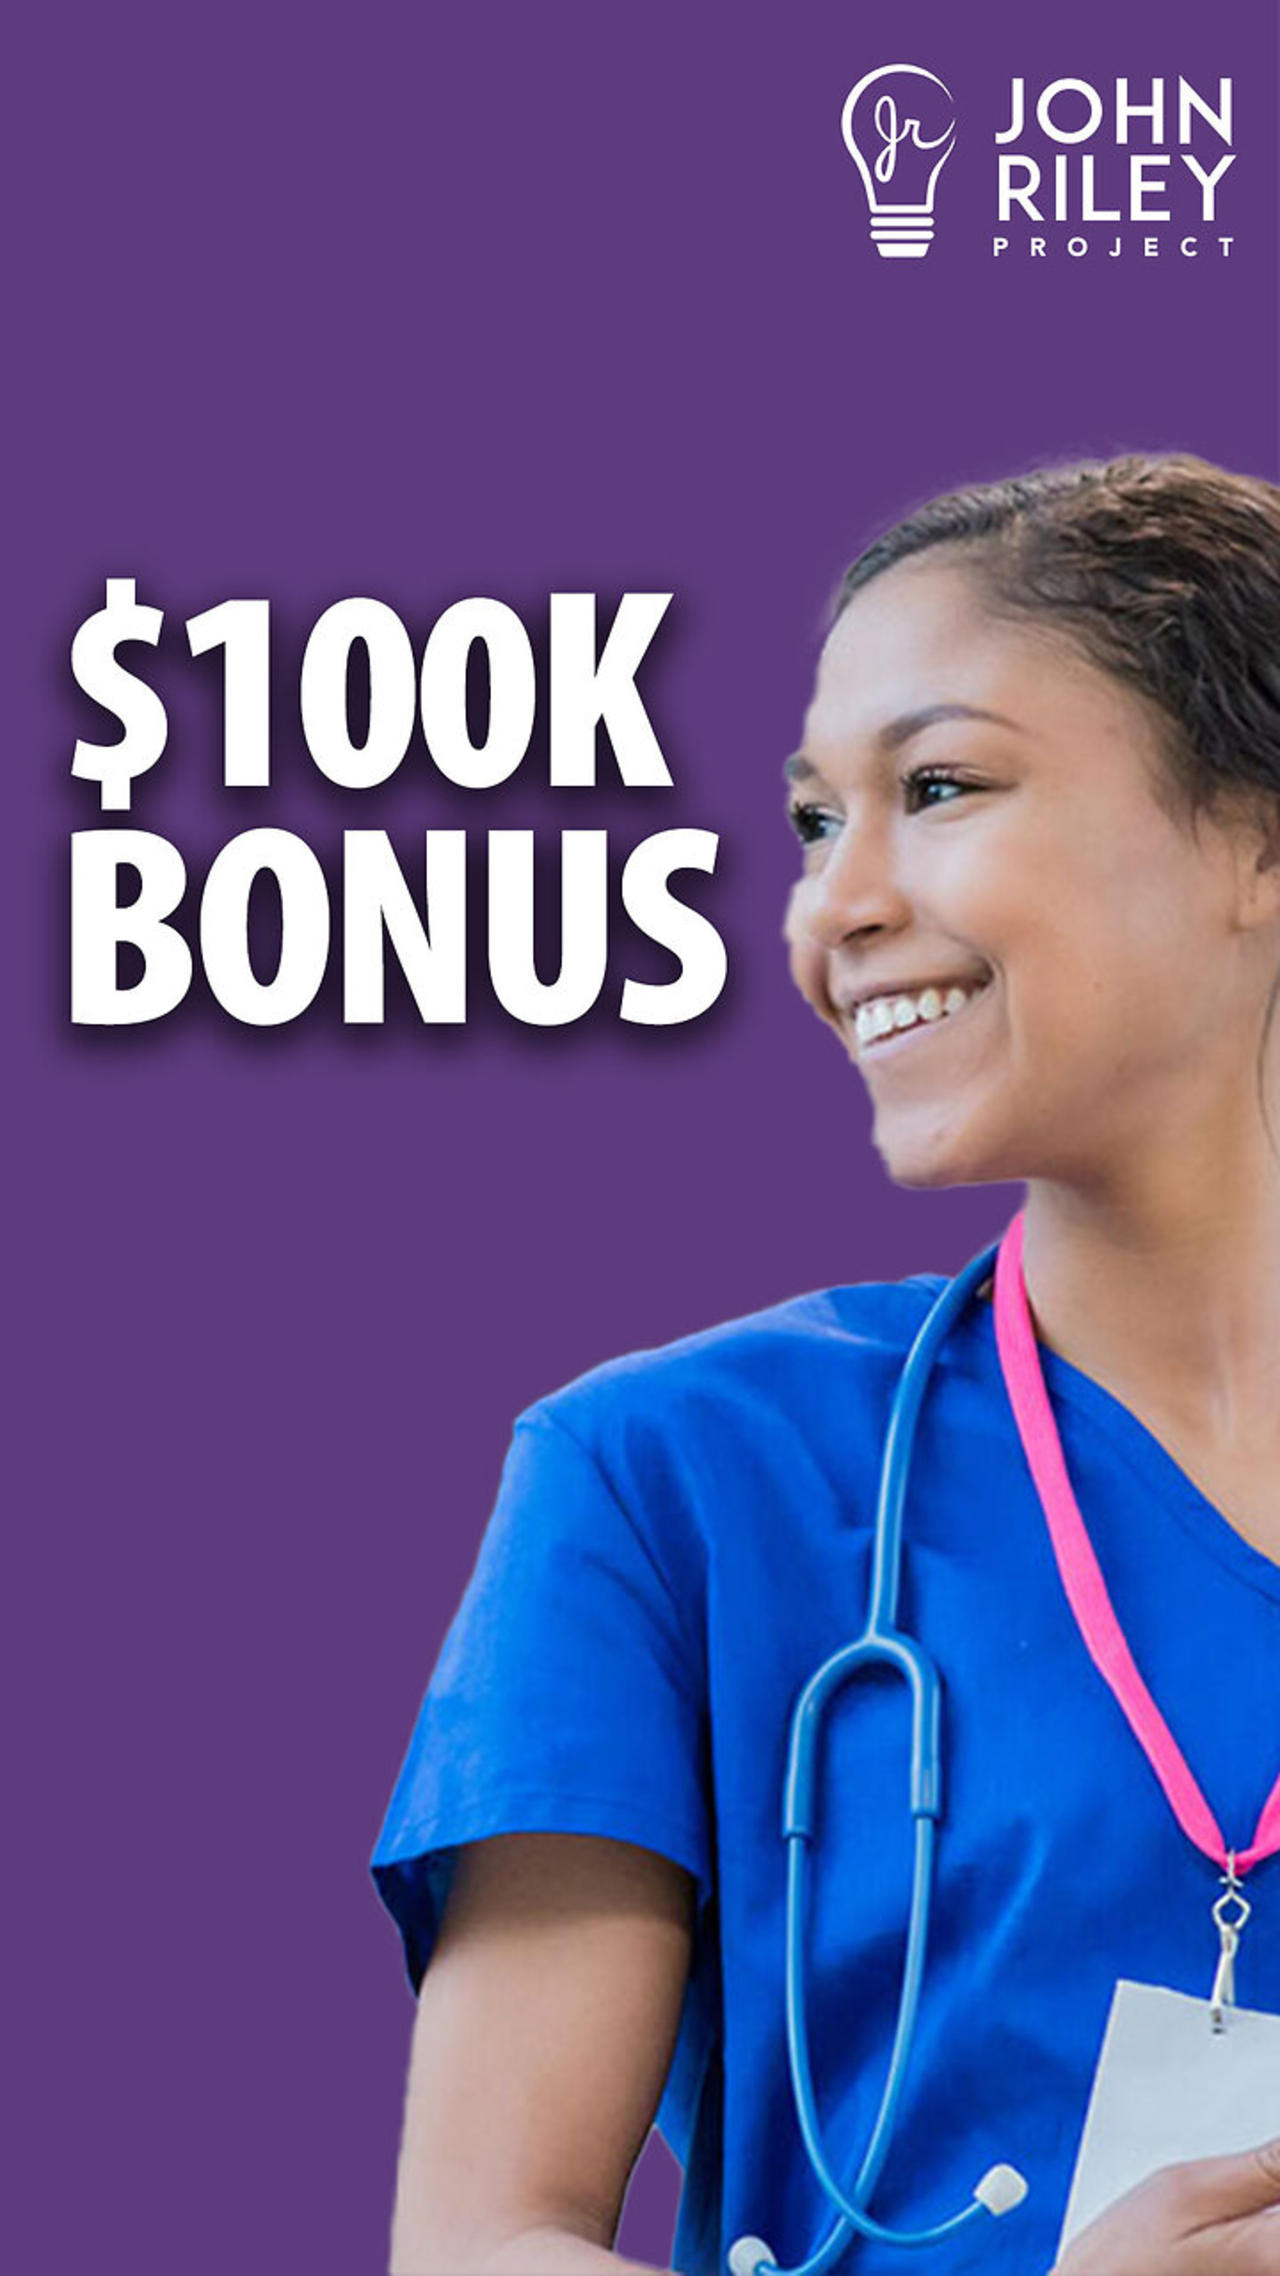 Palomar Health offering nurses up to $100,000 retention bonus to compete with Kaiser Permanente.